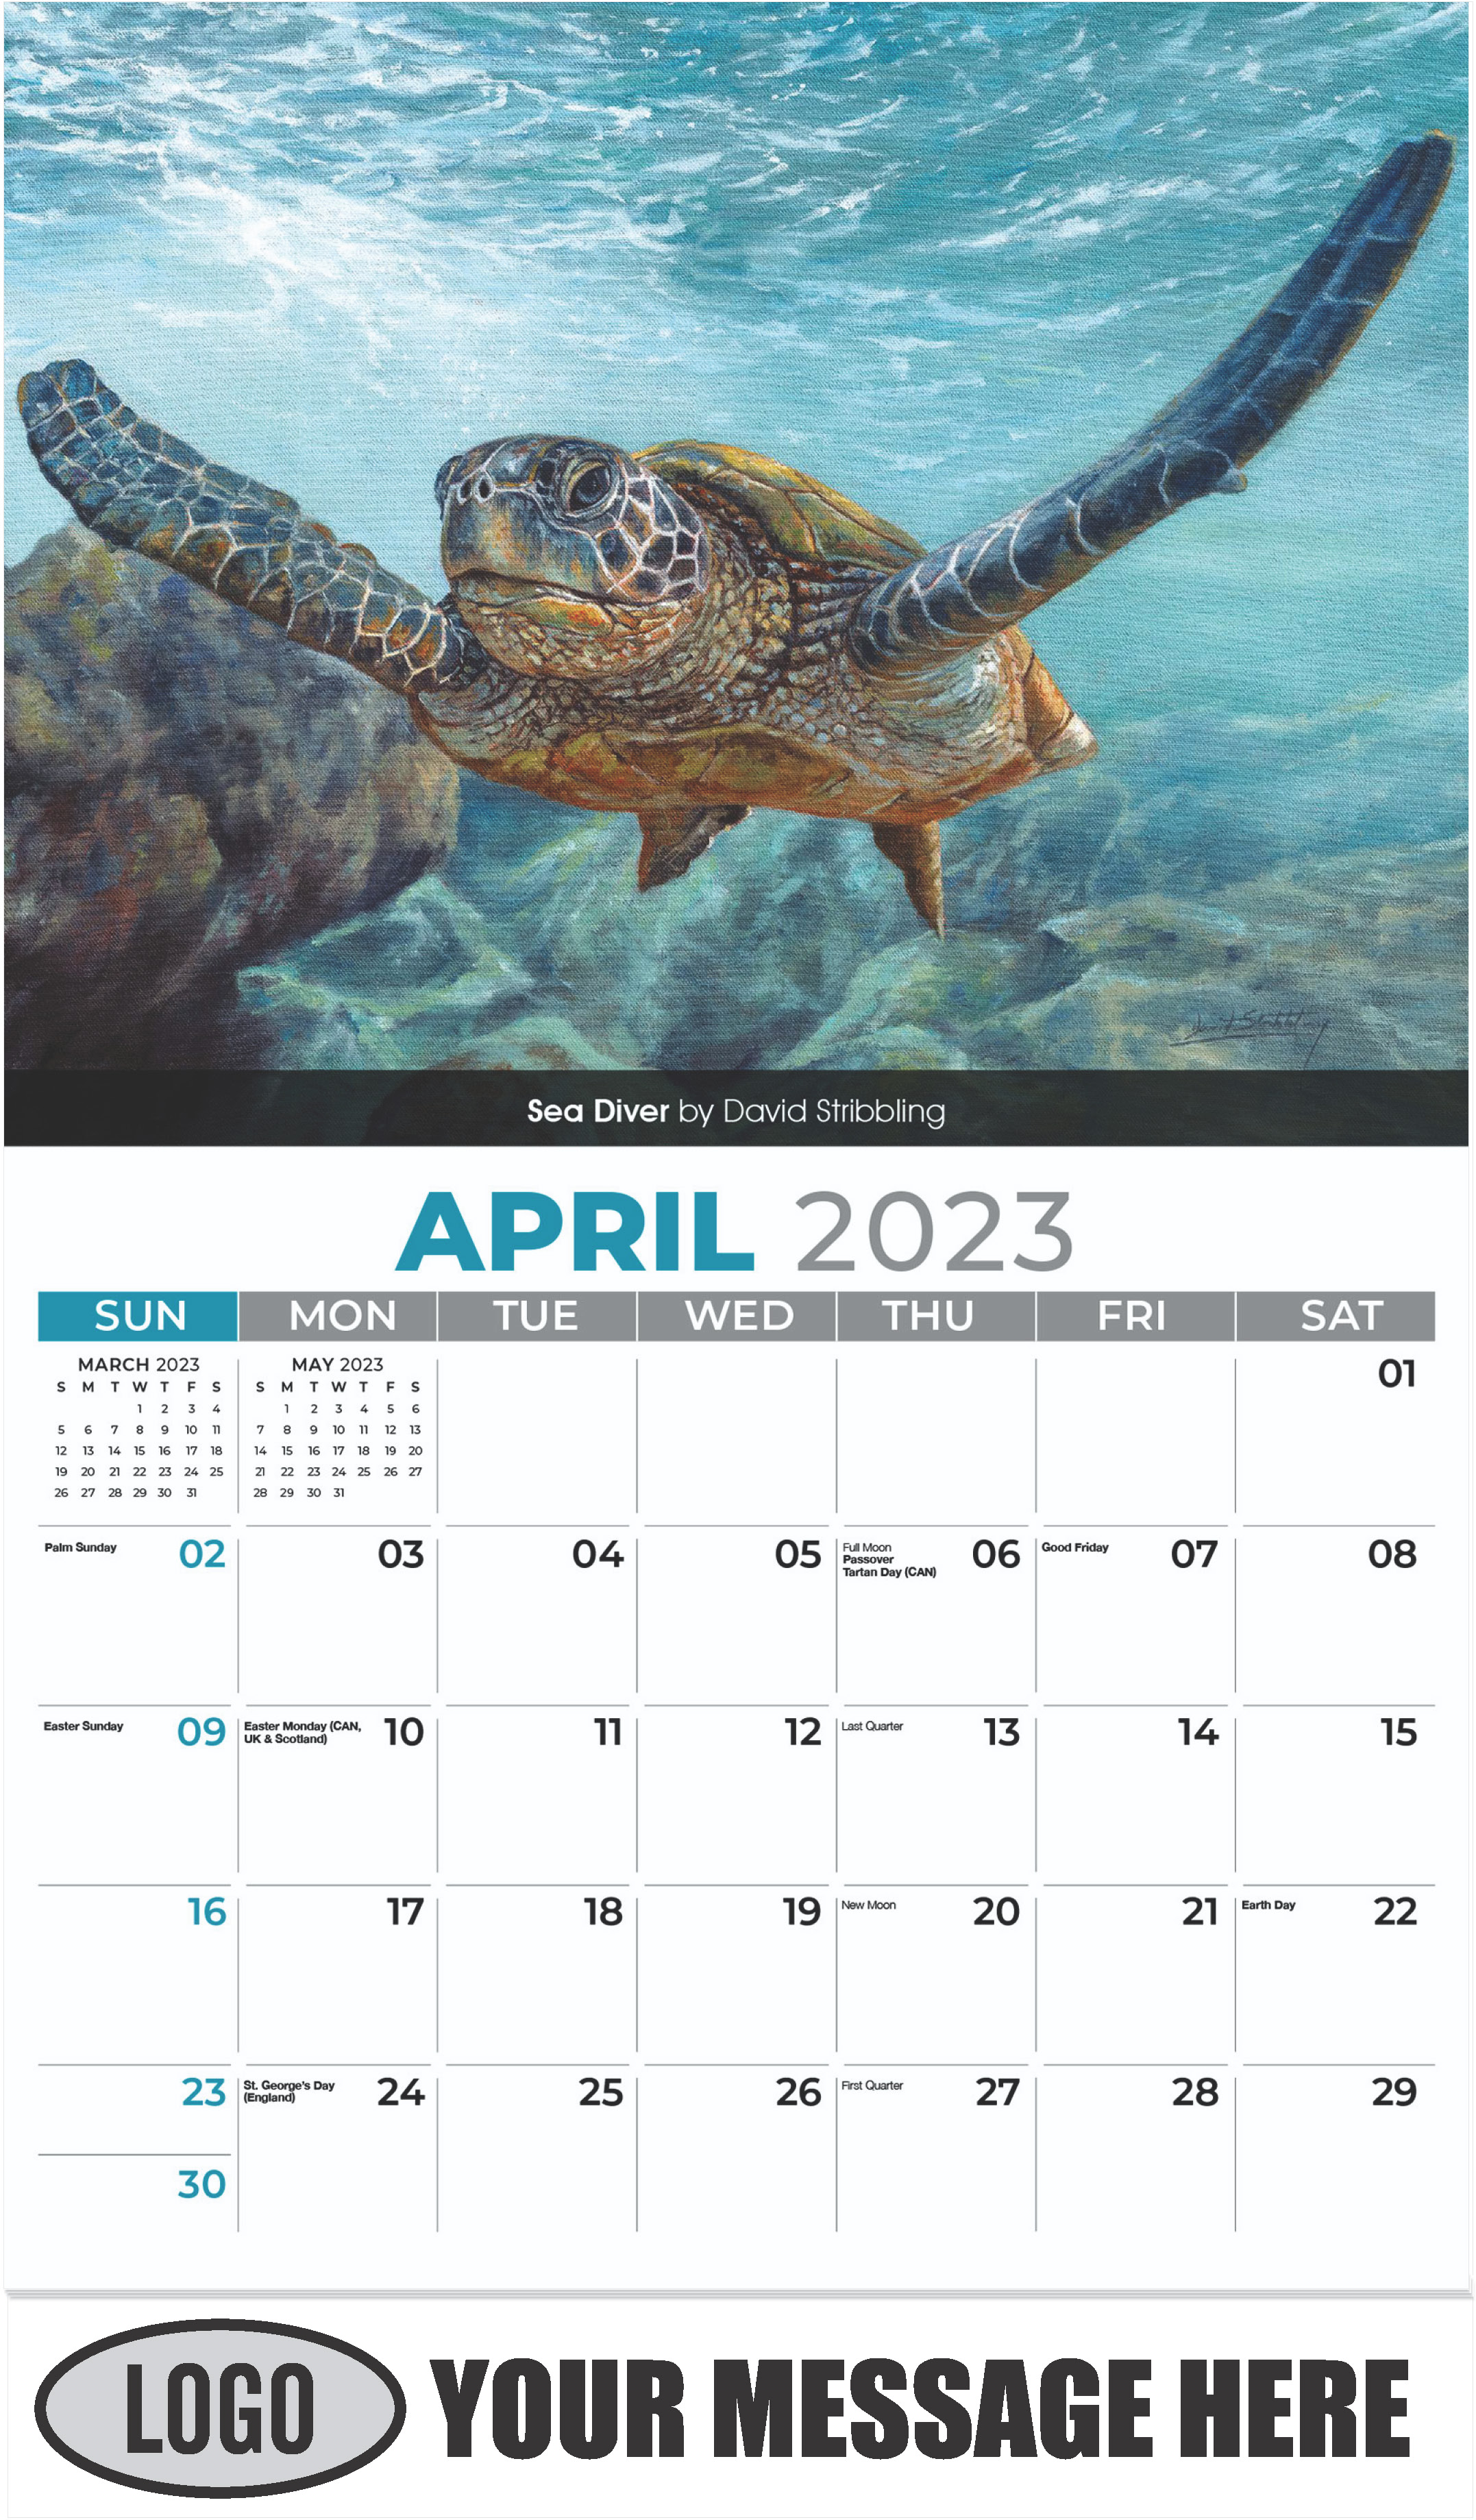 Sea Diver by David Stribbling - April - Wildlife Portraits 2023 Promotional Calendar